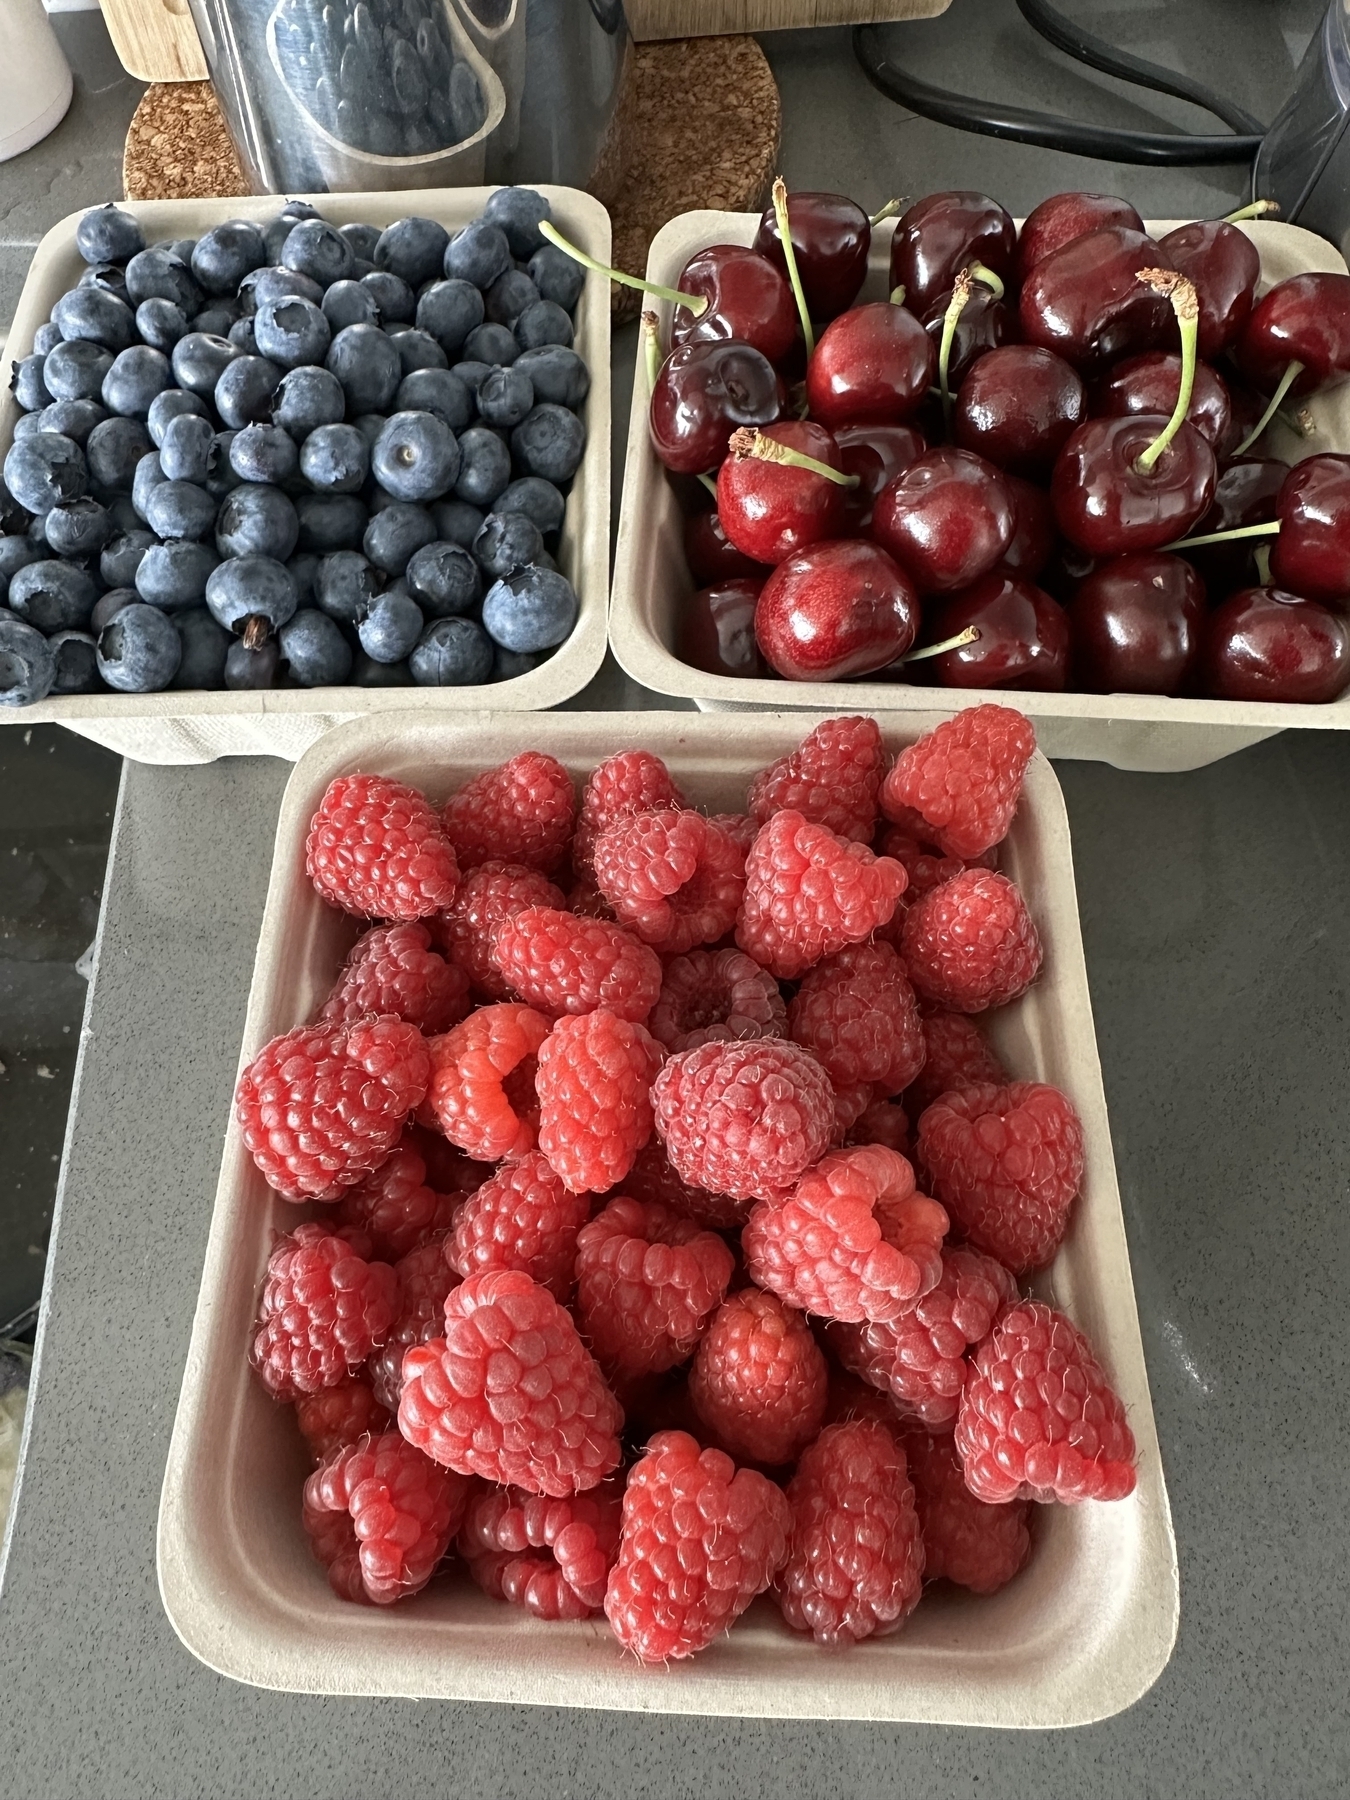 Picture of fresh blueberries, raspberries, and cherries.